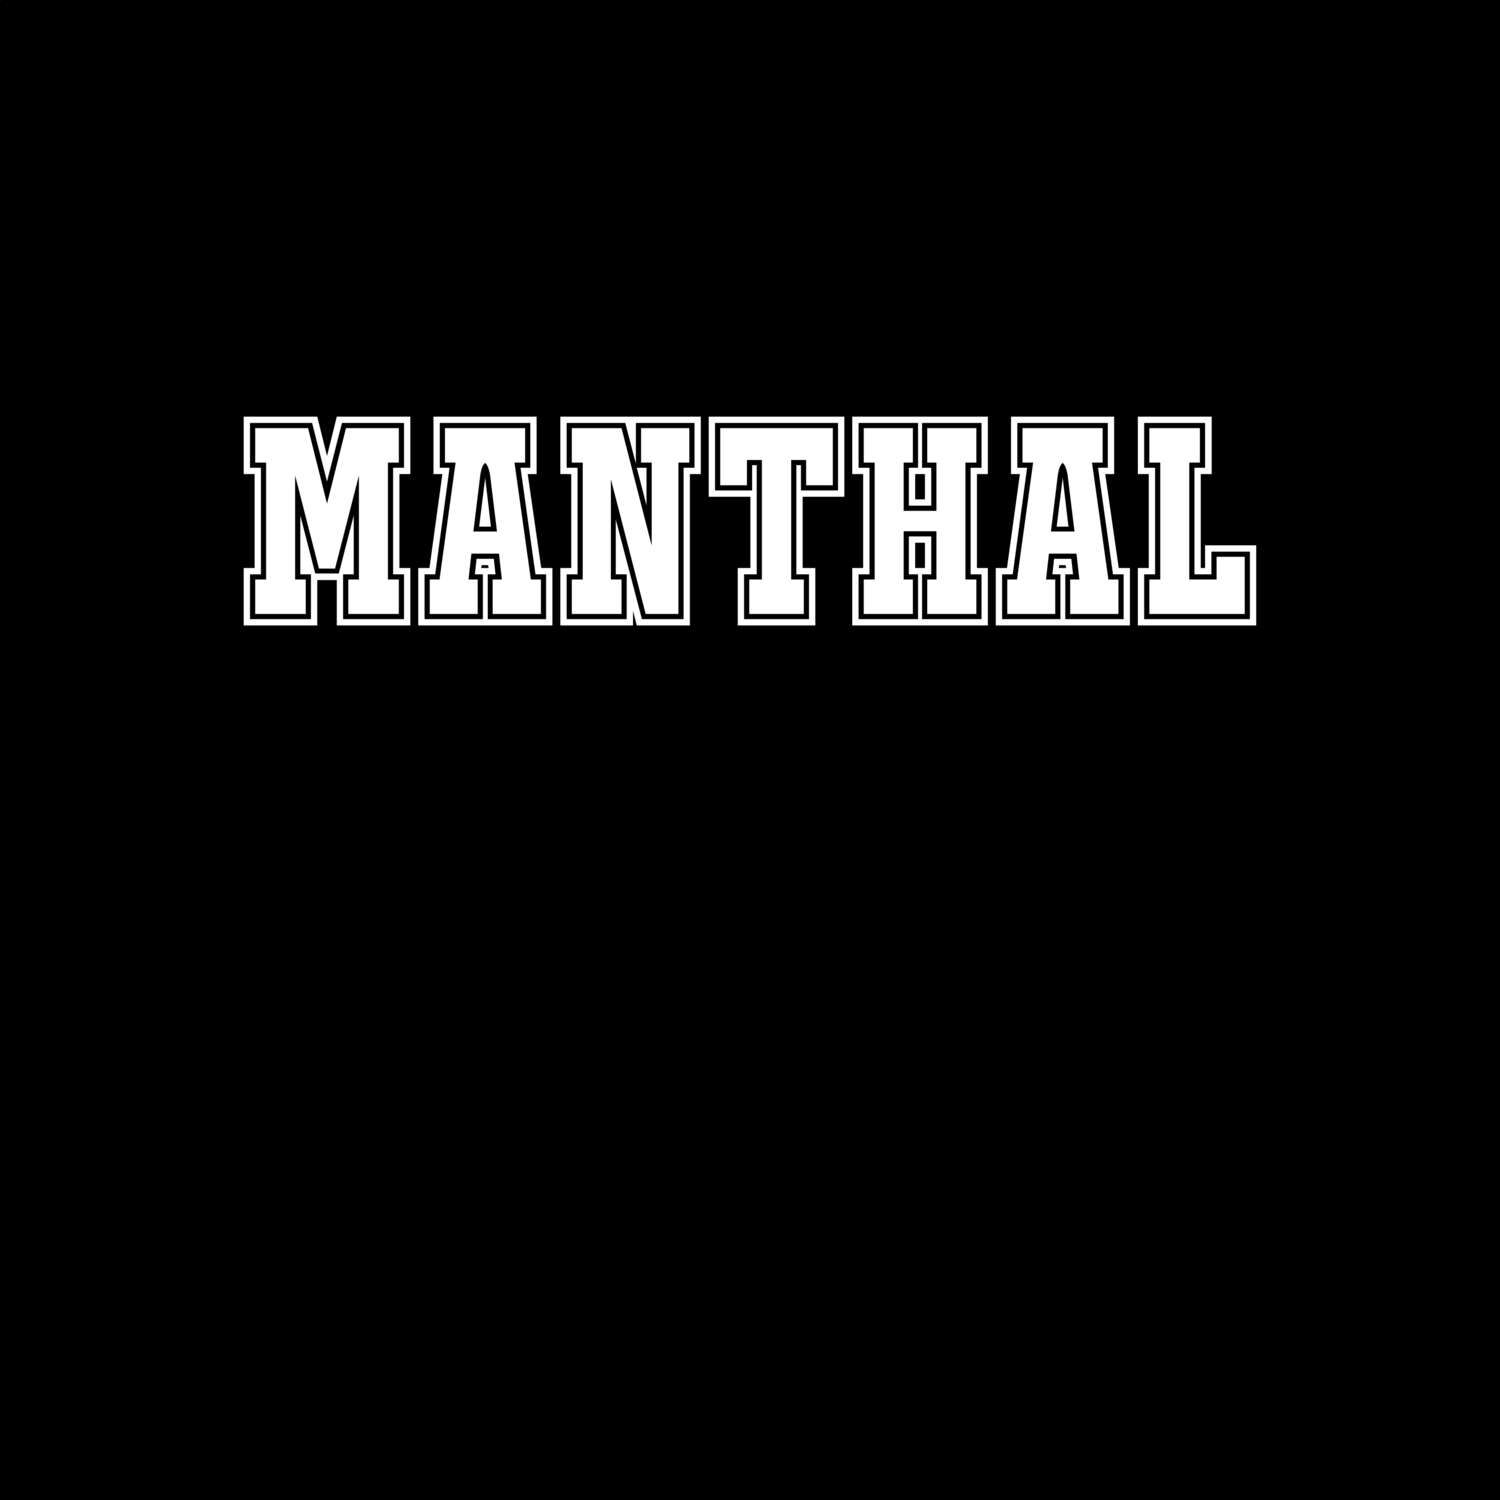 Manthal T-Shirt »Classic«